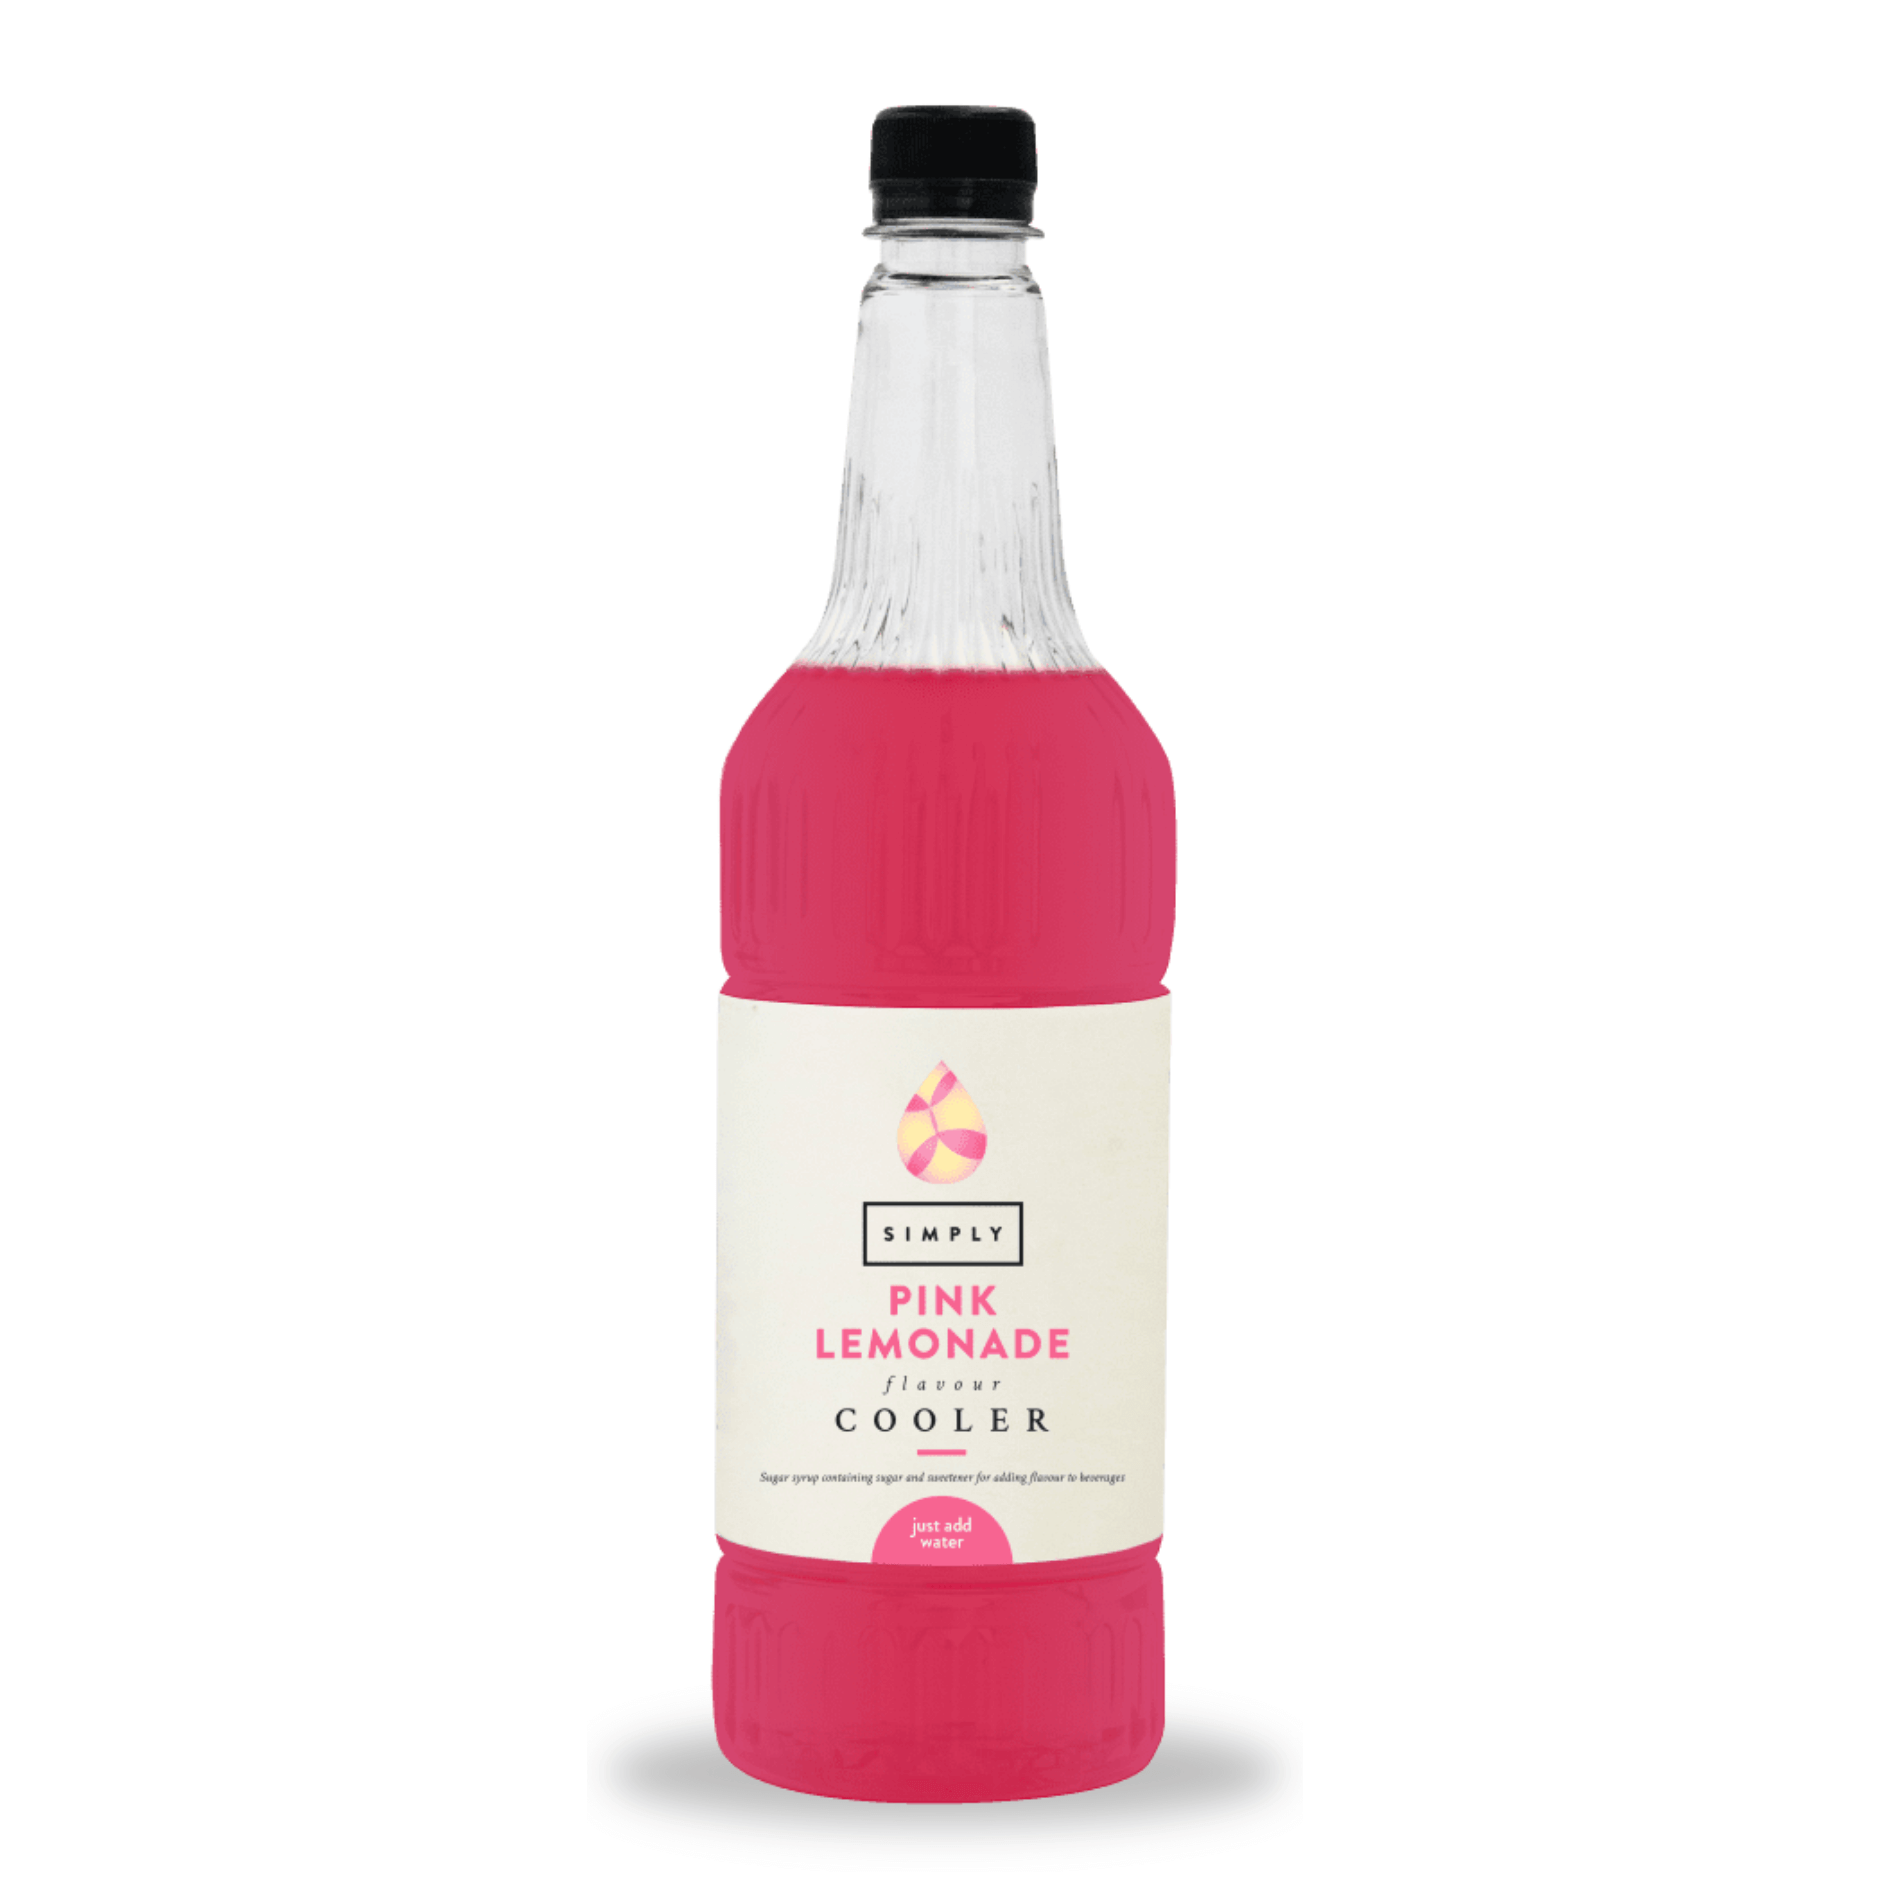 Simply Pink Lemonade Cooler Syrup (1 Litre)